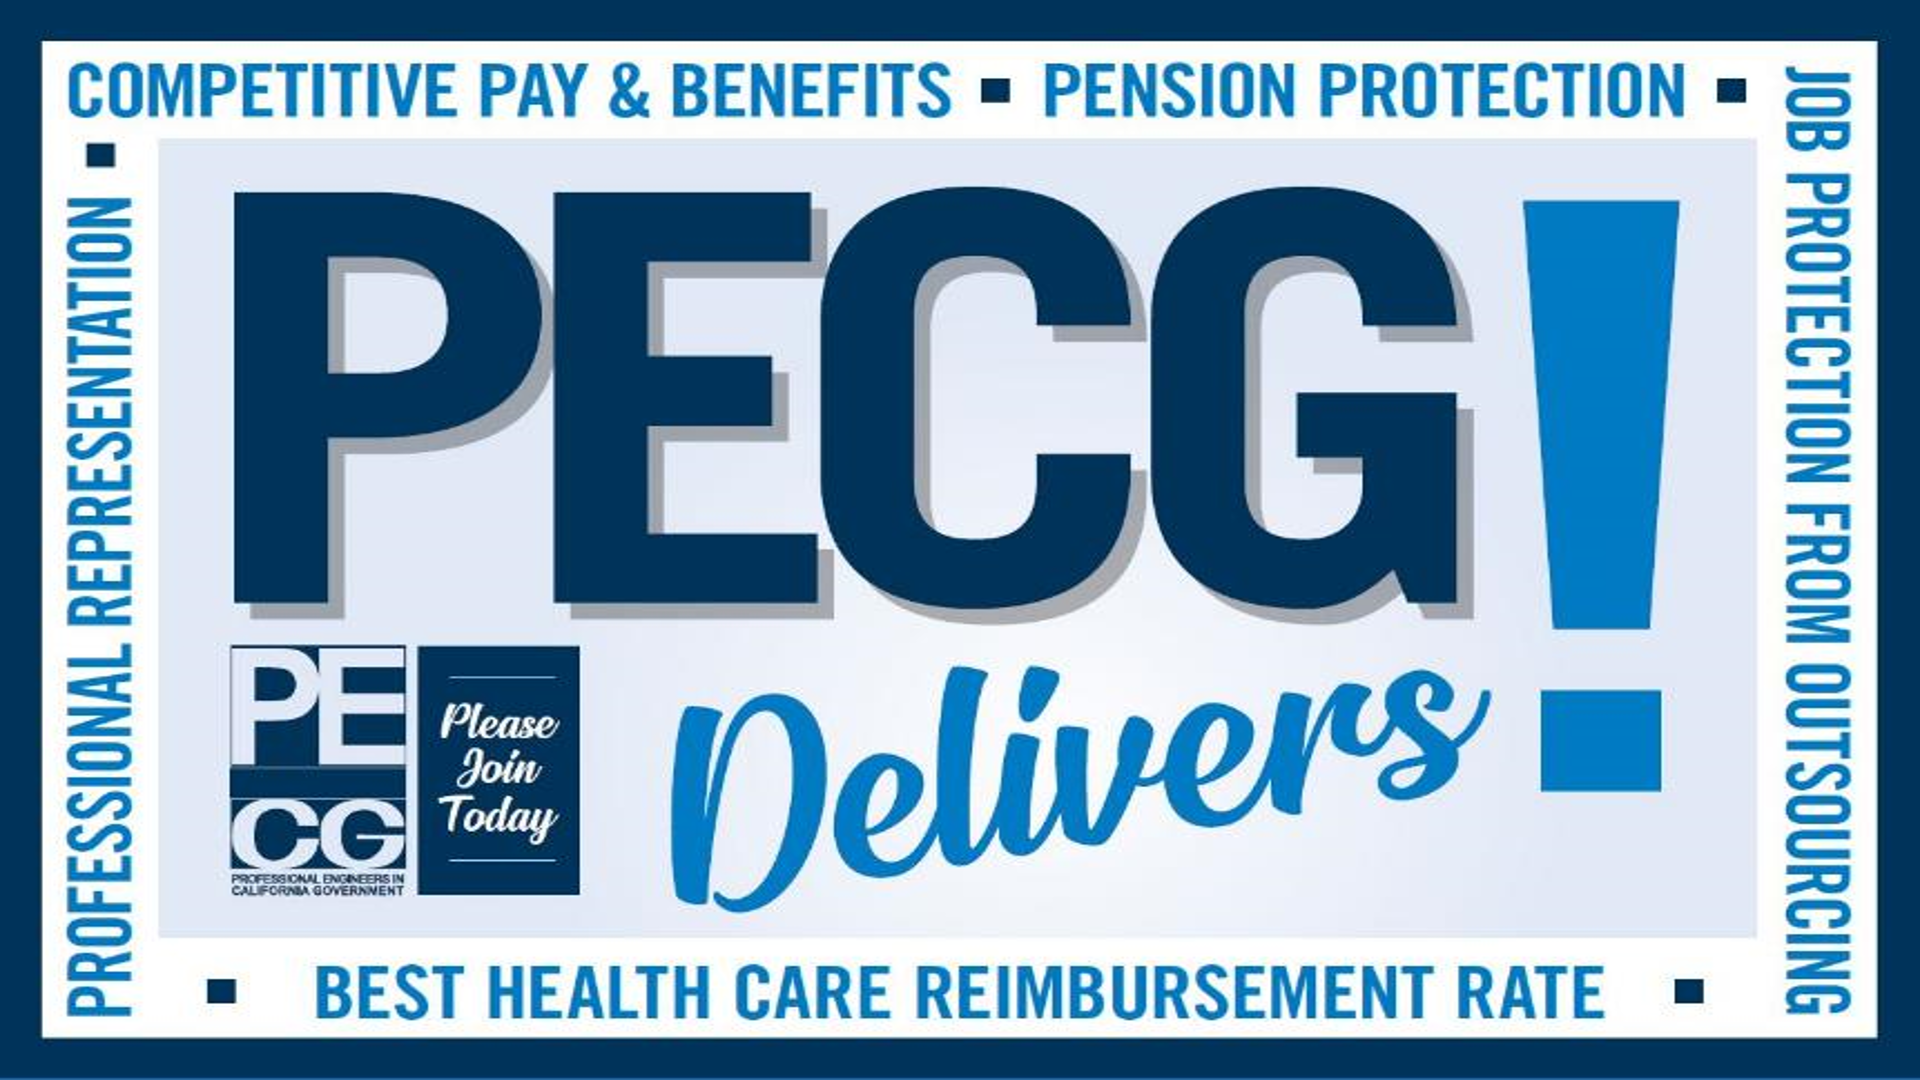 pecg delivers logo